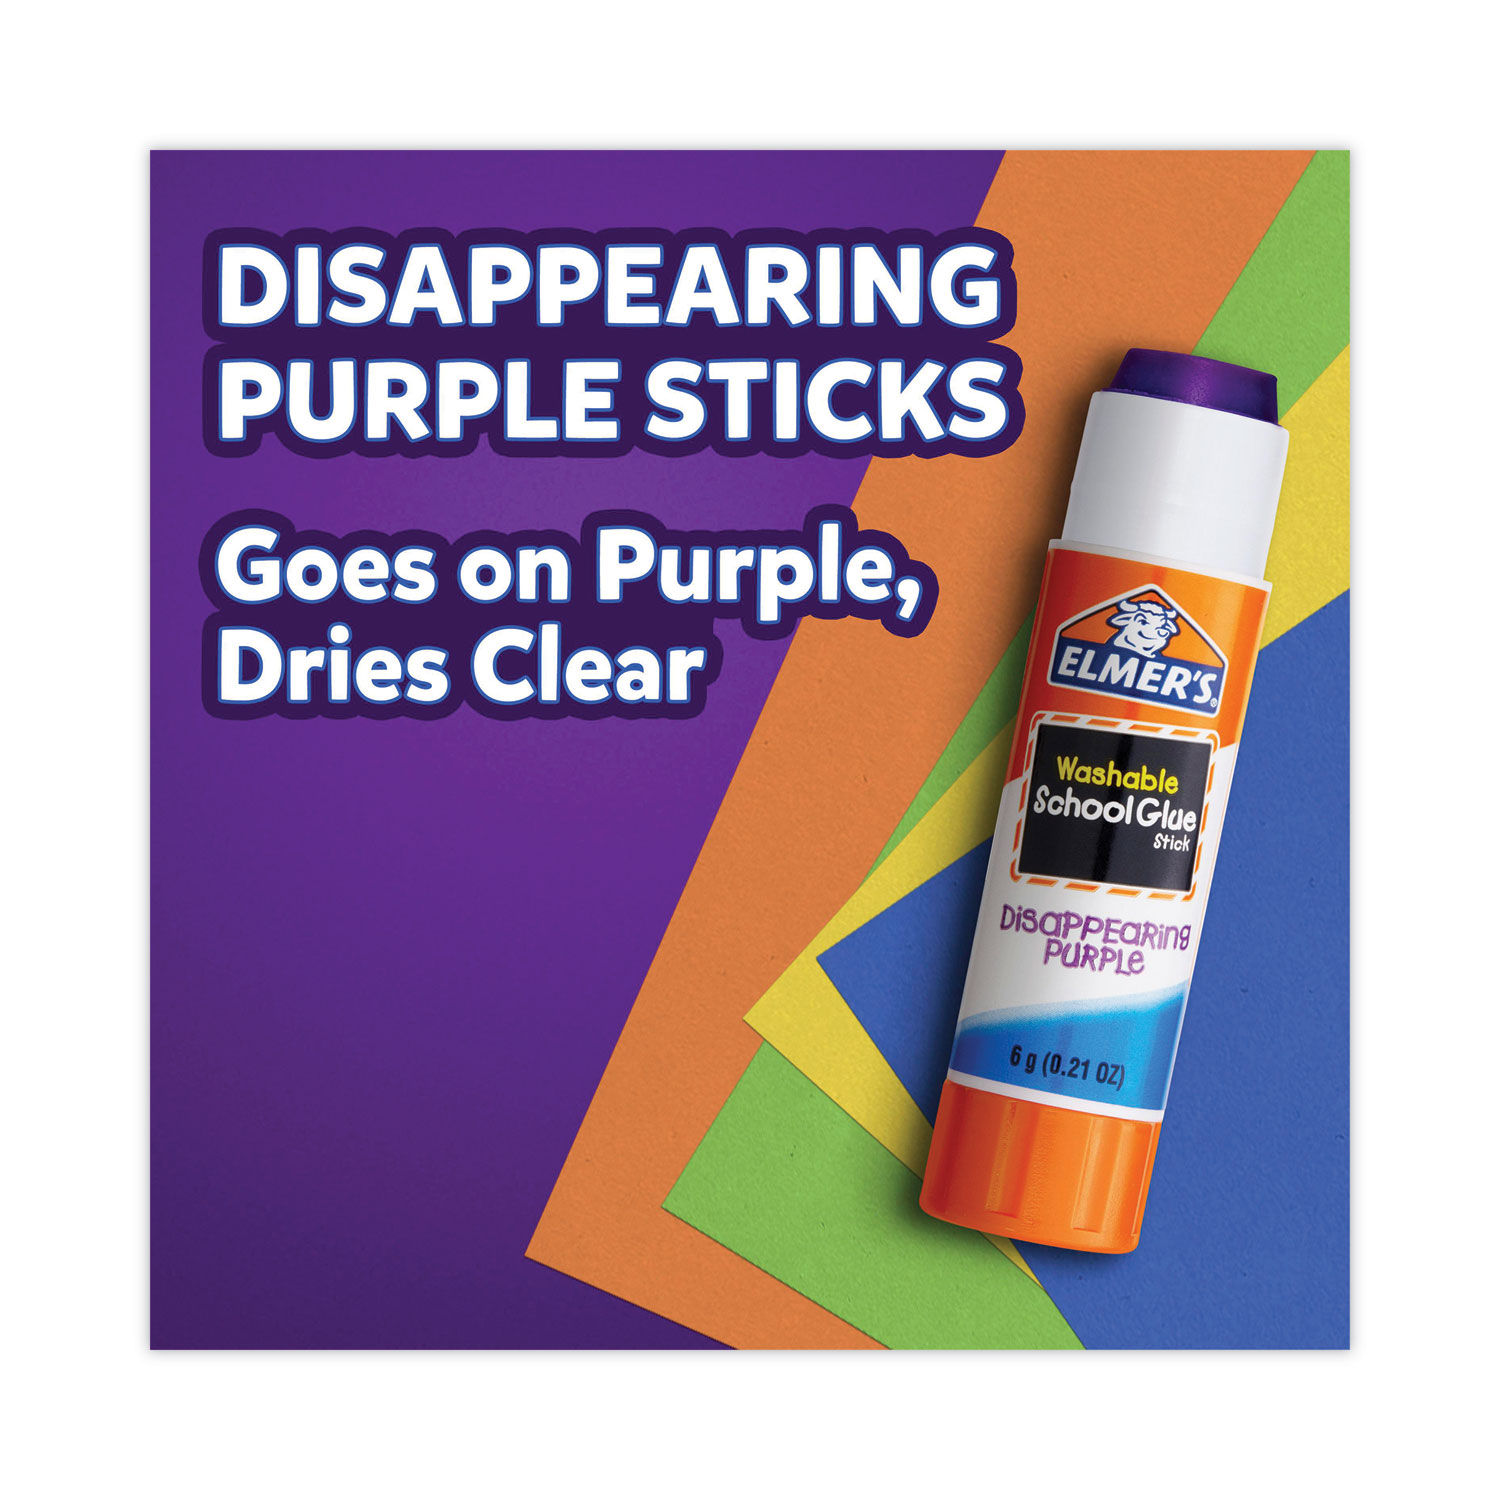 5 PACK Elmers Goes On Purple Dries Clear Glue Sticks